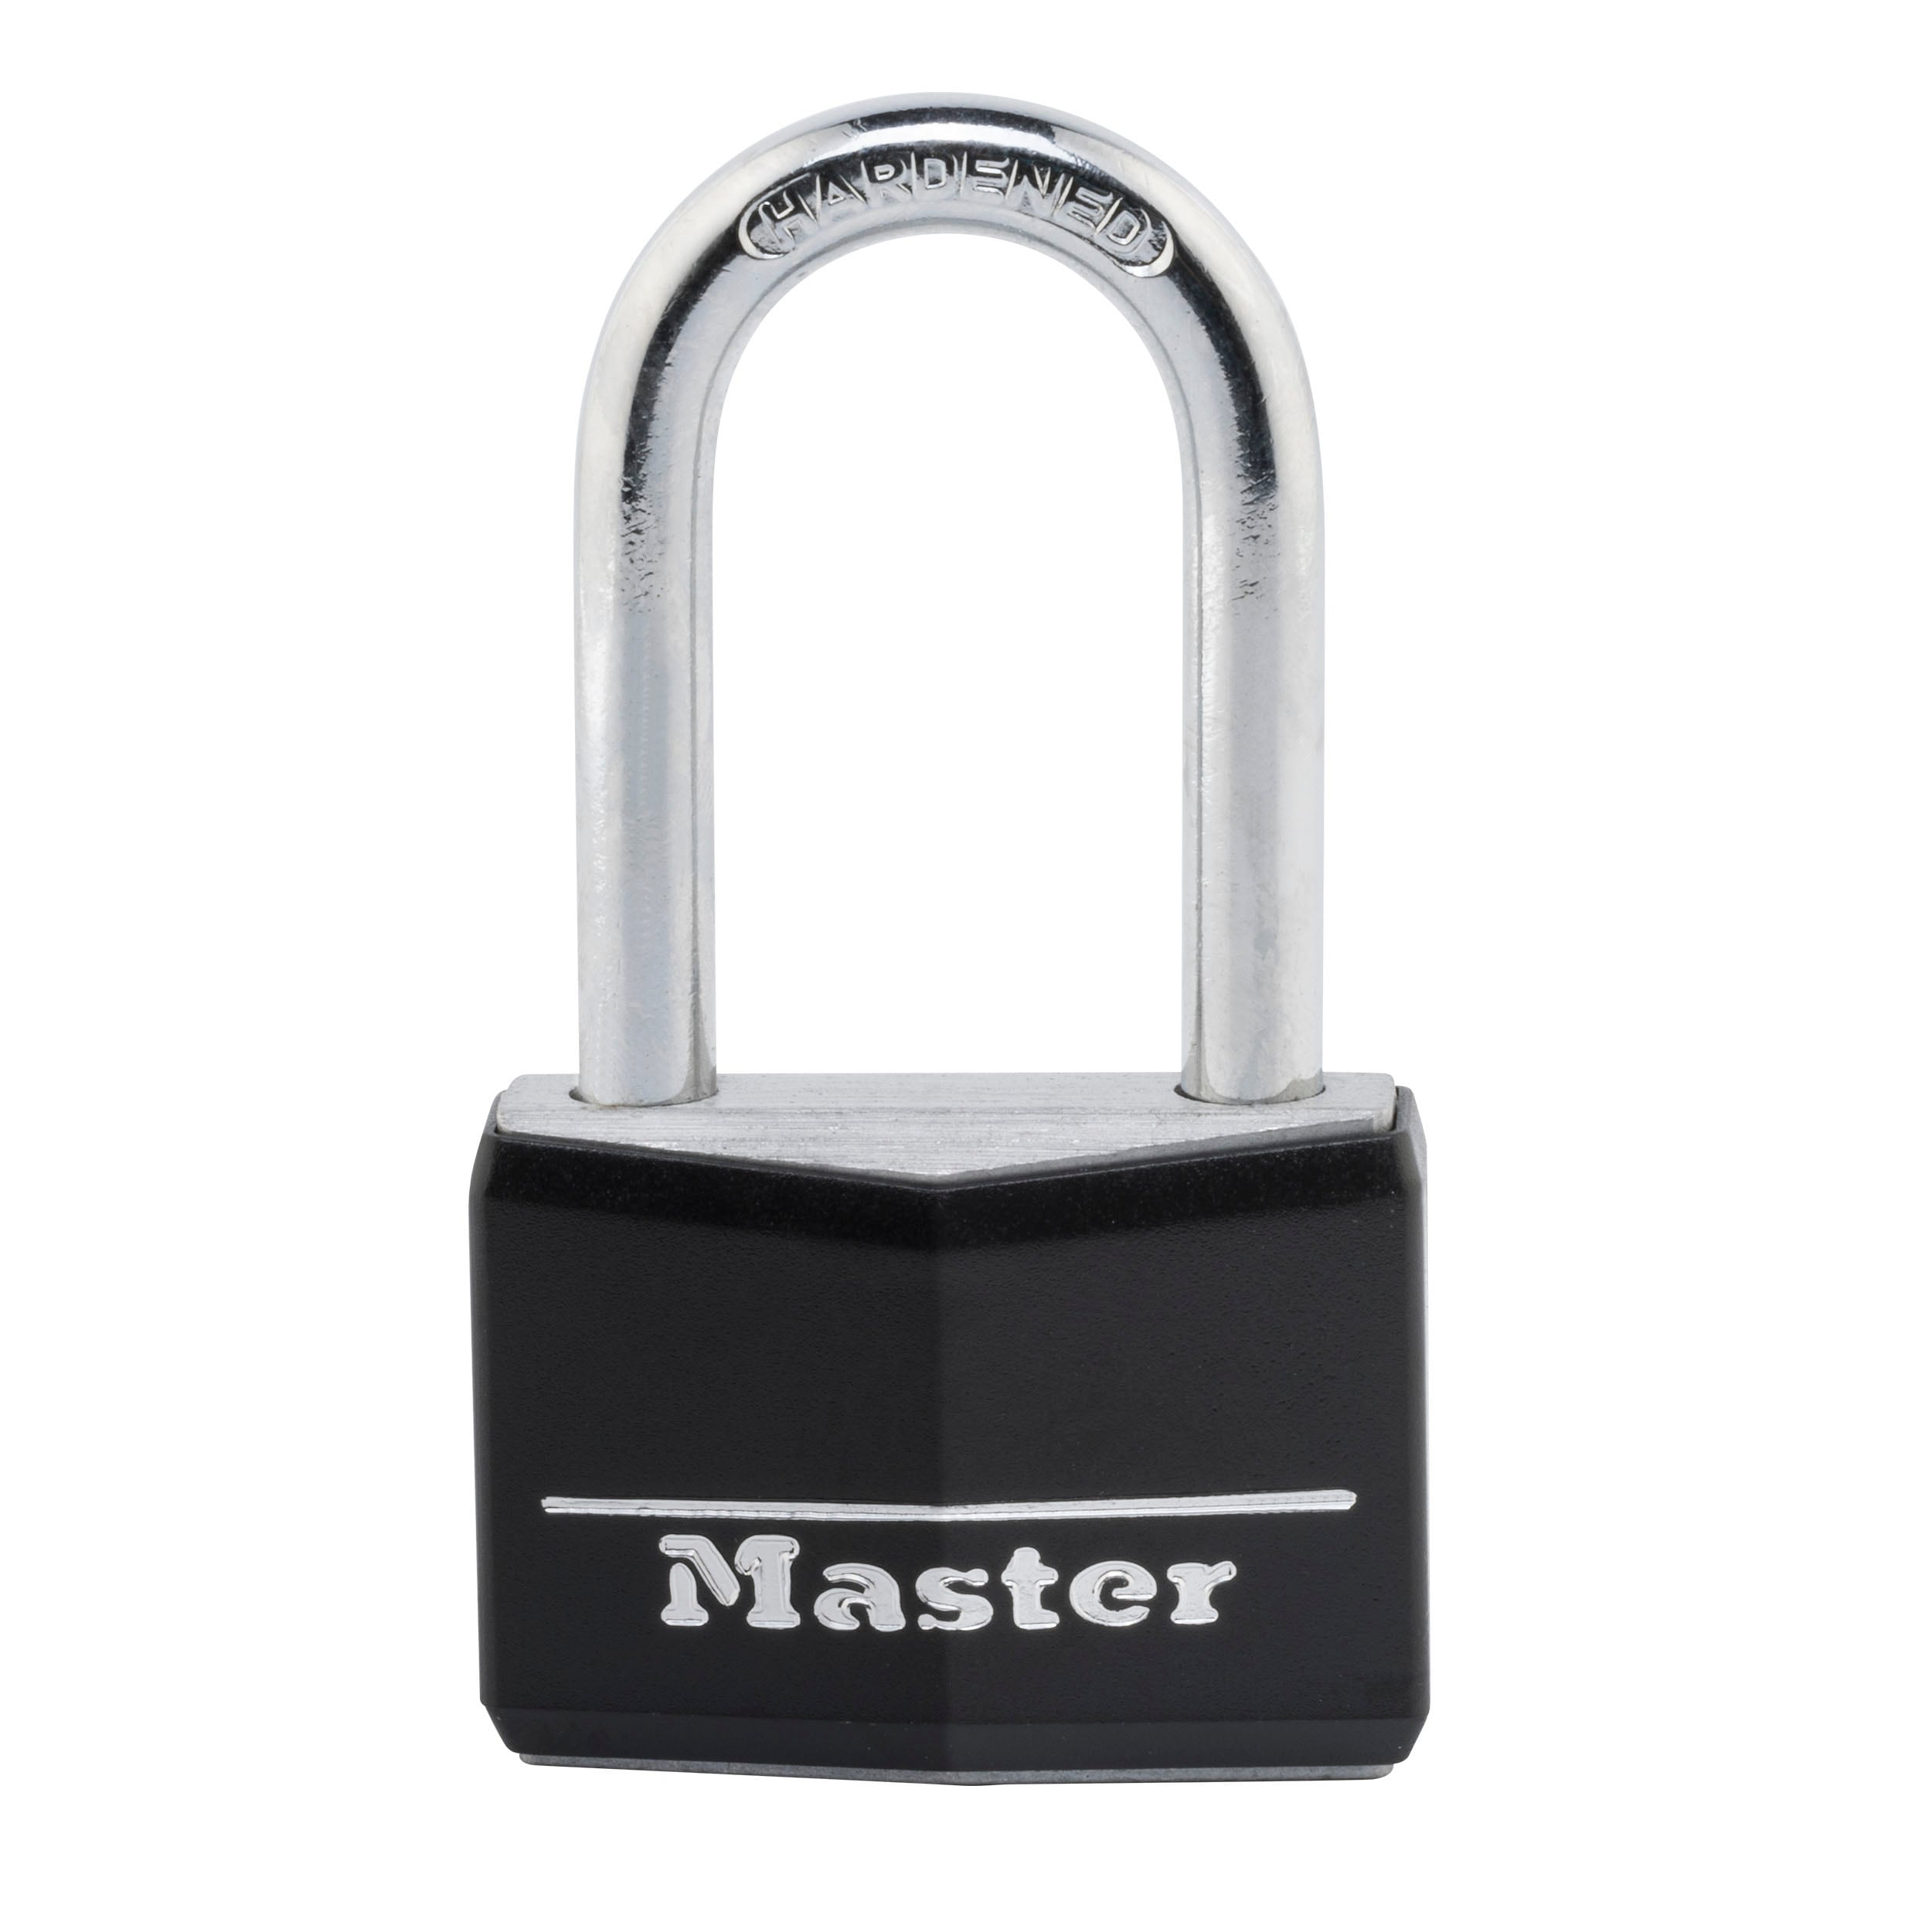 Master Lock Heavy Duty Outdoor Shrouded Padlock with Key, 2-3/4 in